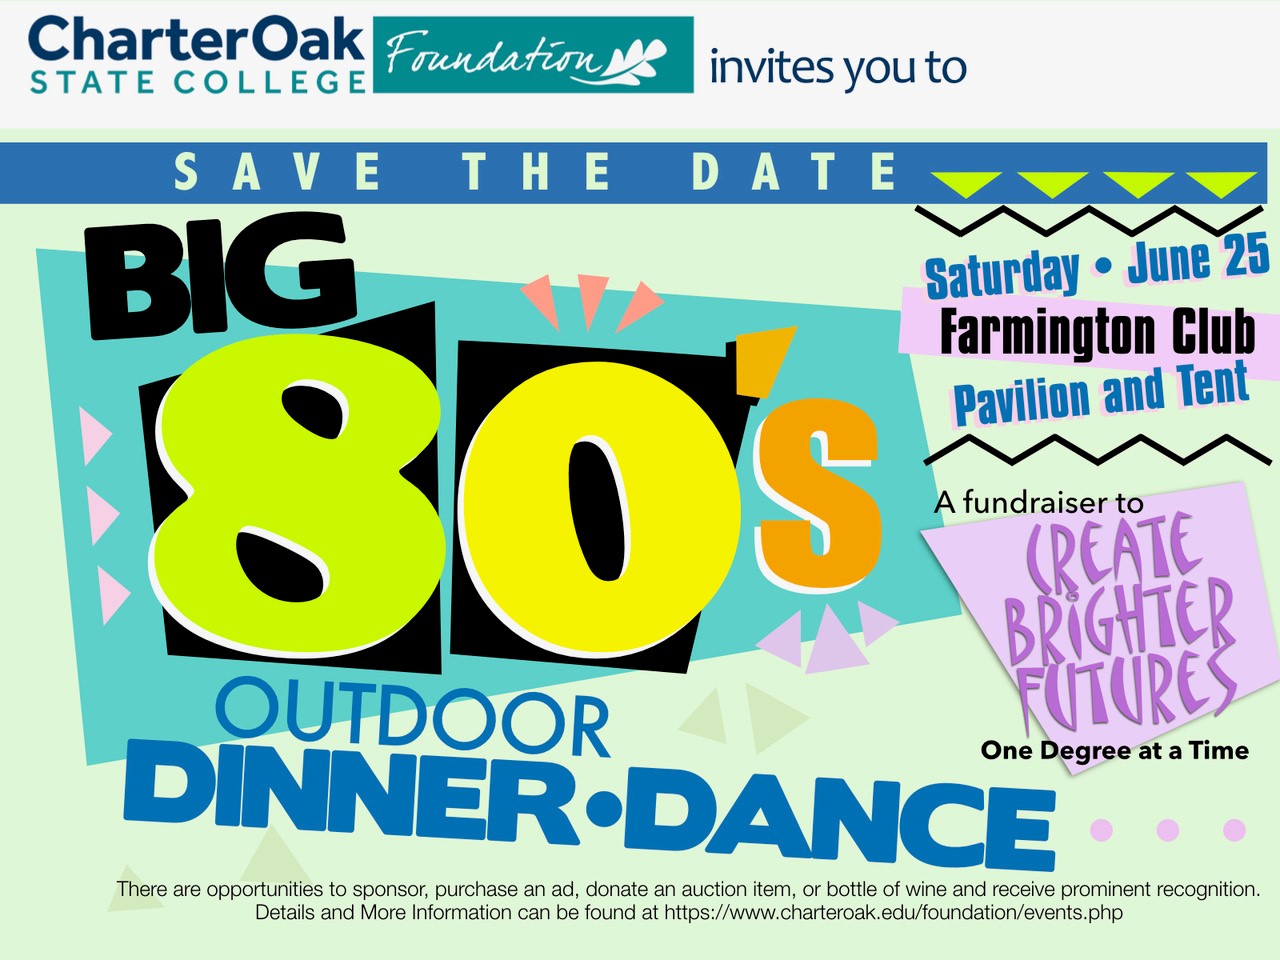 Big 80s Dinner Dance on Saturday June 25 2022